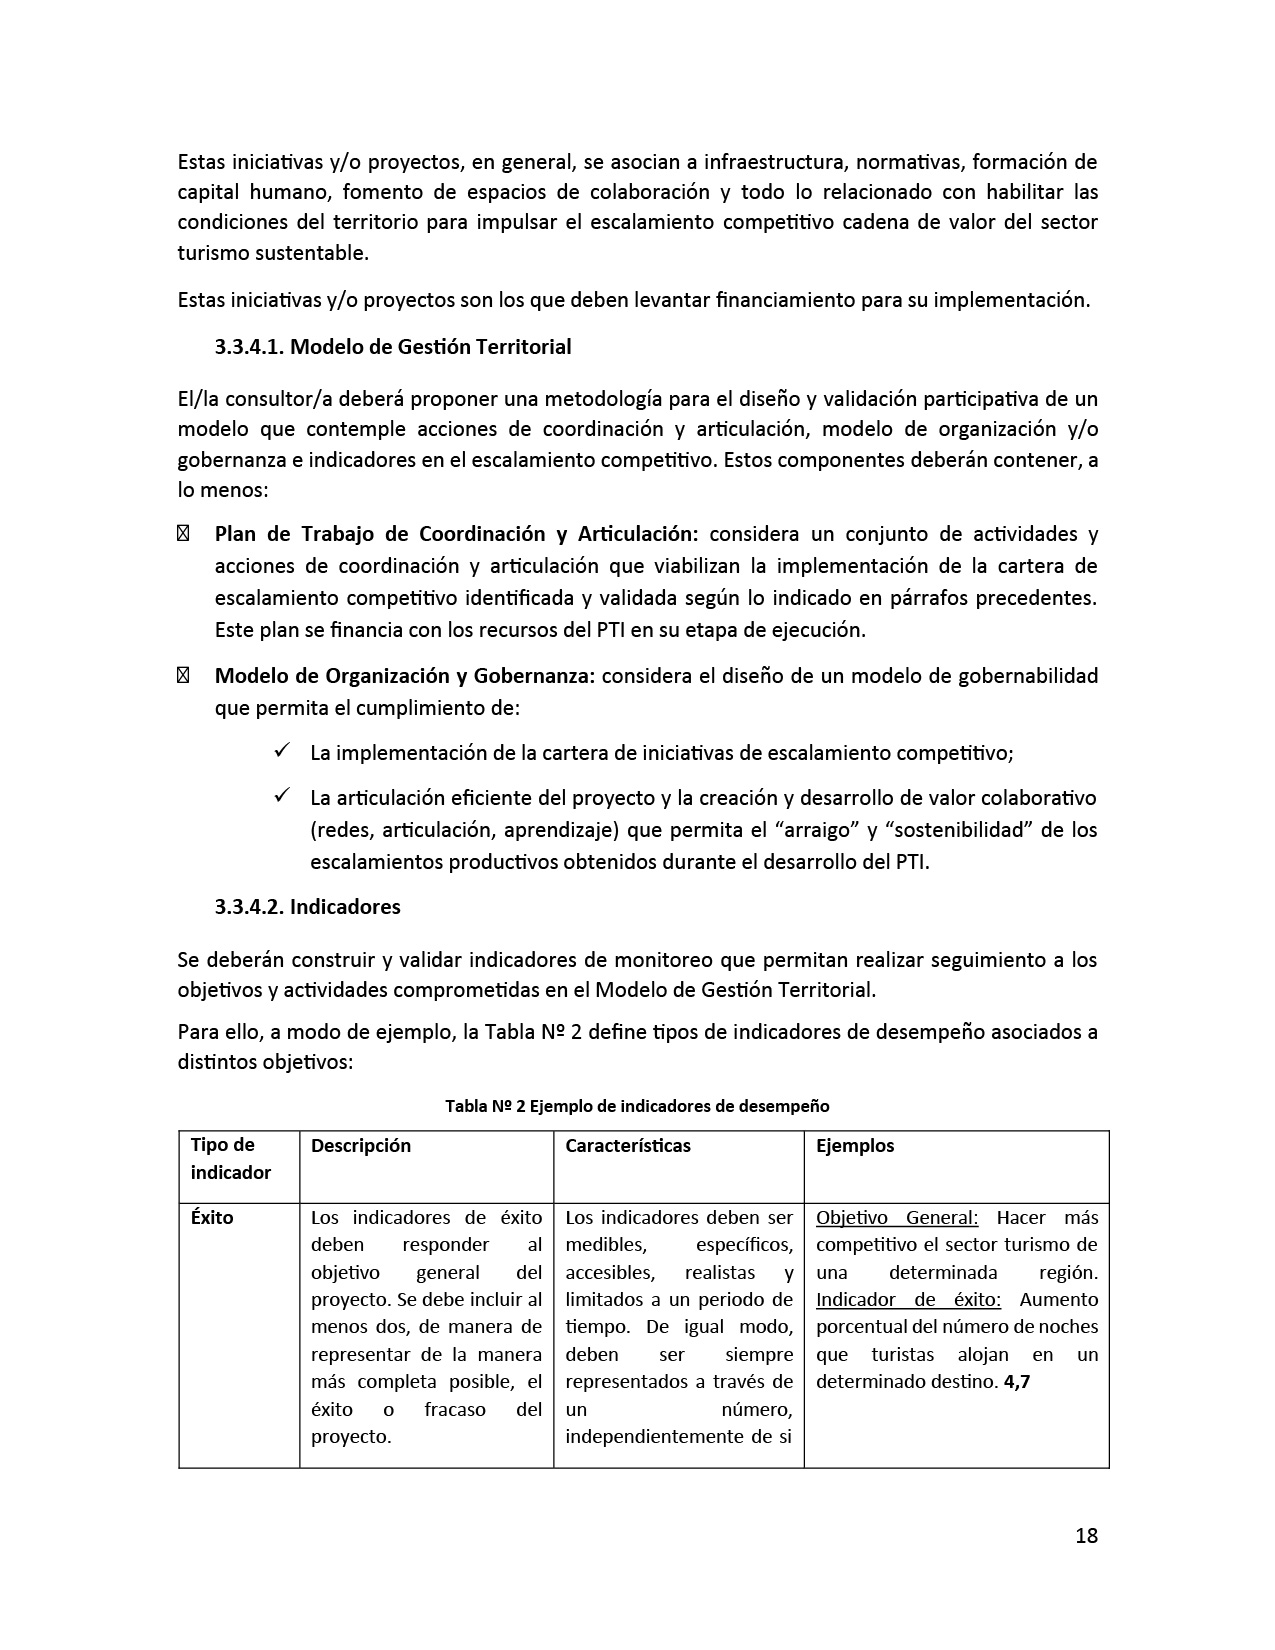 230104_TDR-Validacion-Estrategica PTI PATAGONIA COSTA FINALES-v2-18